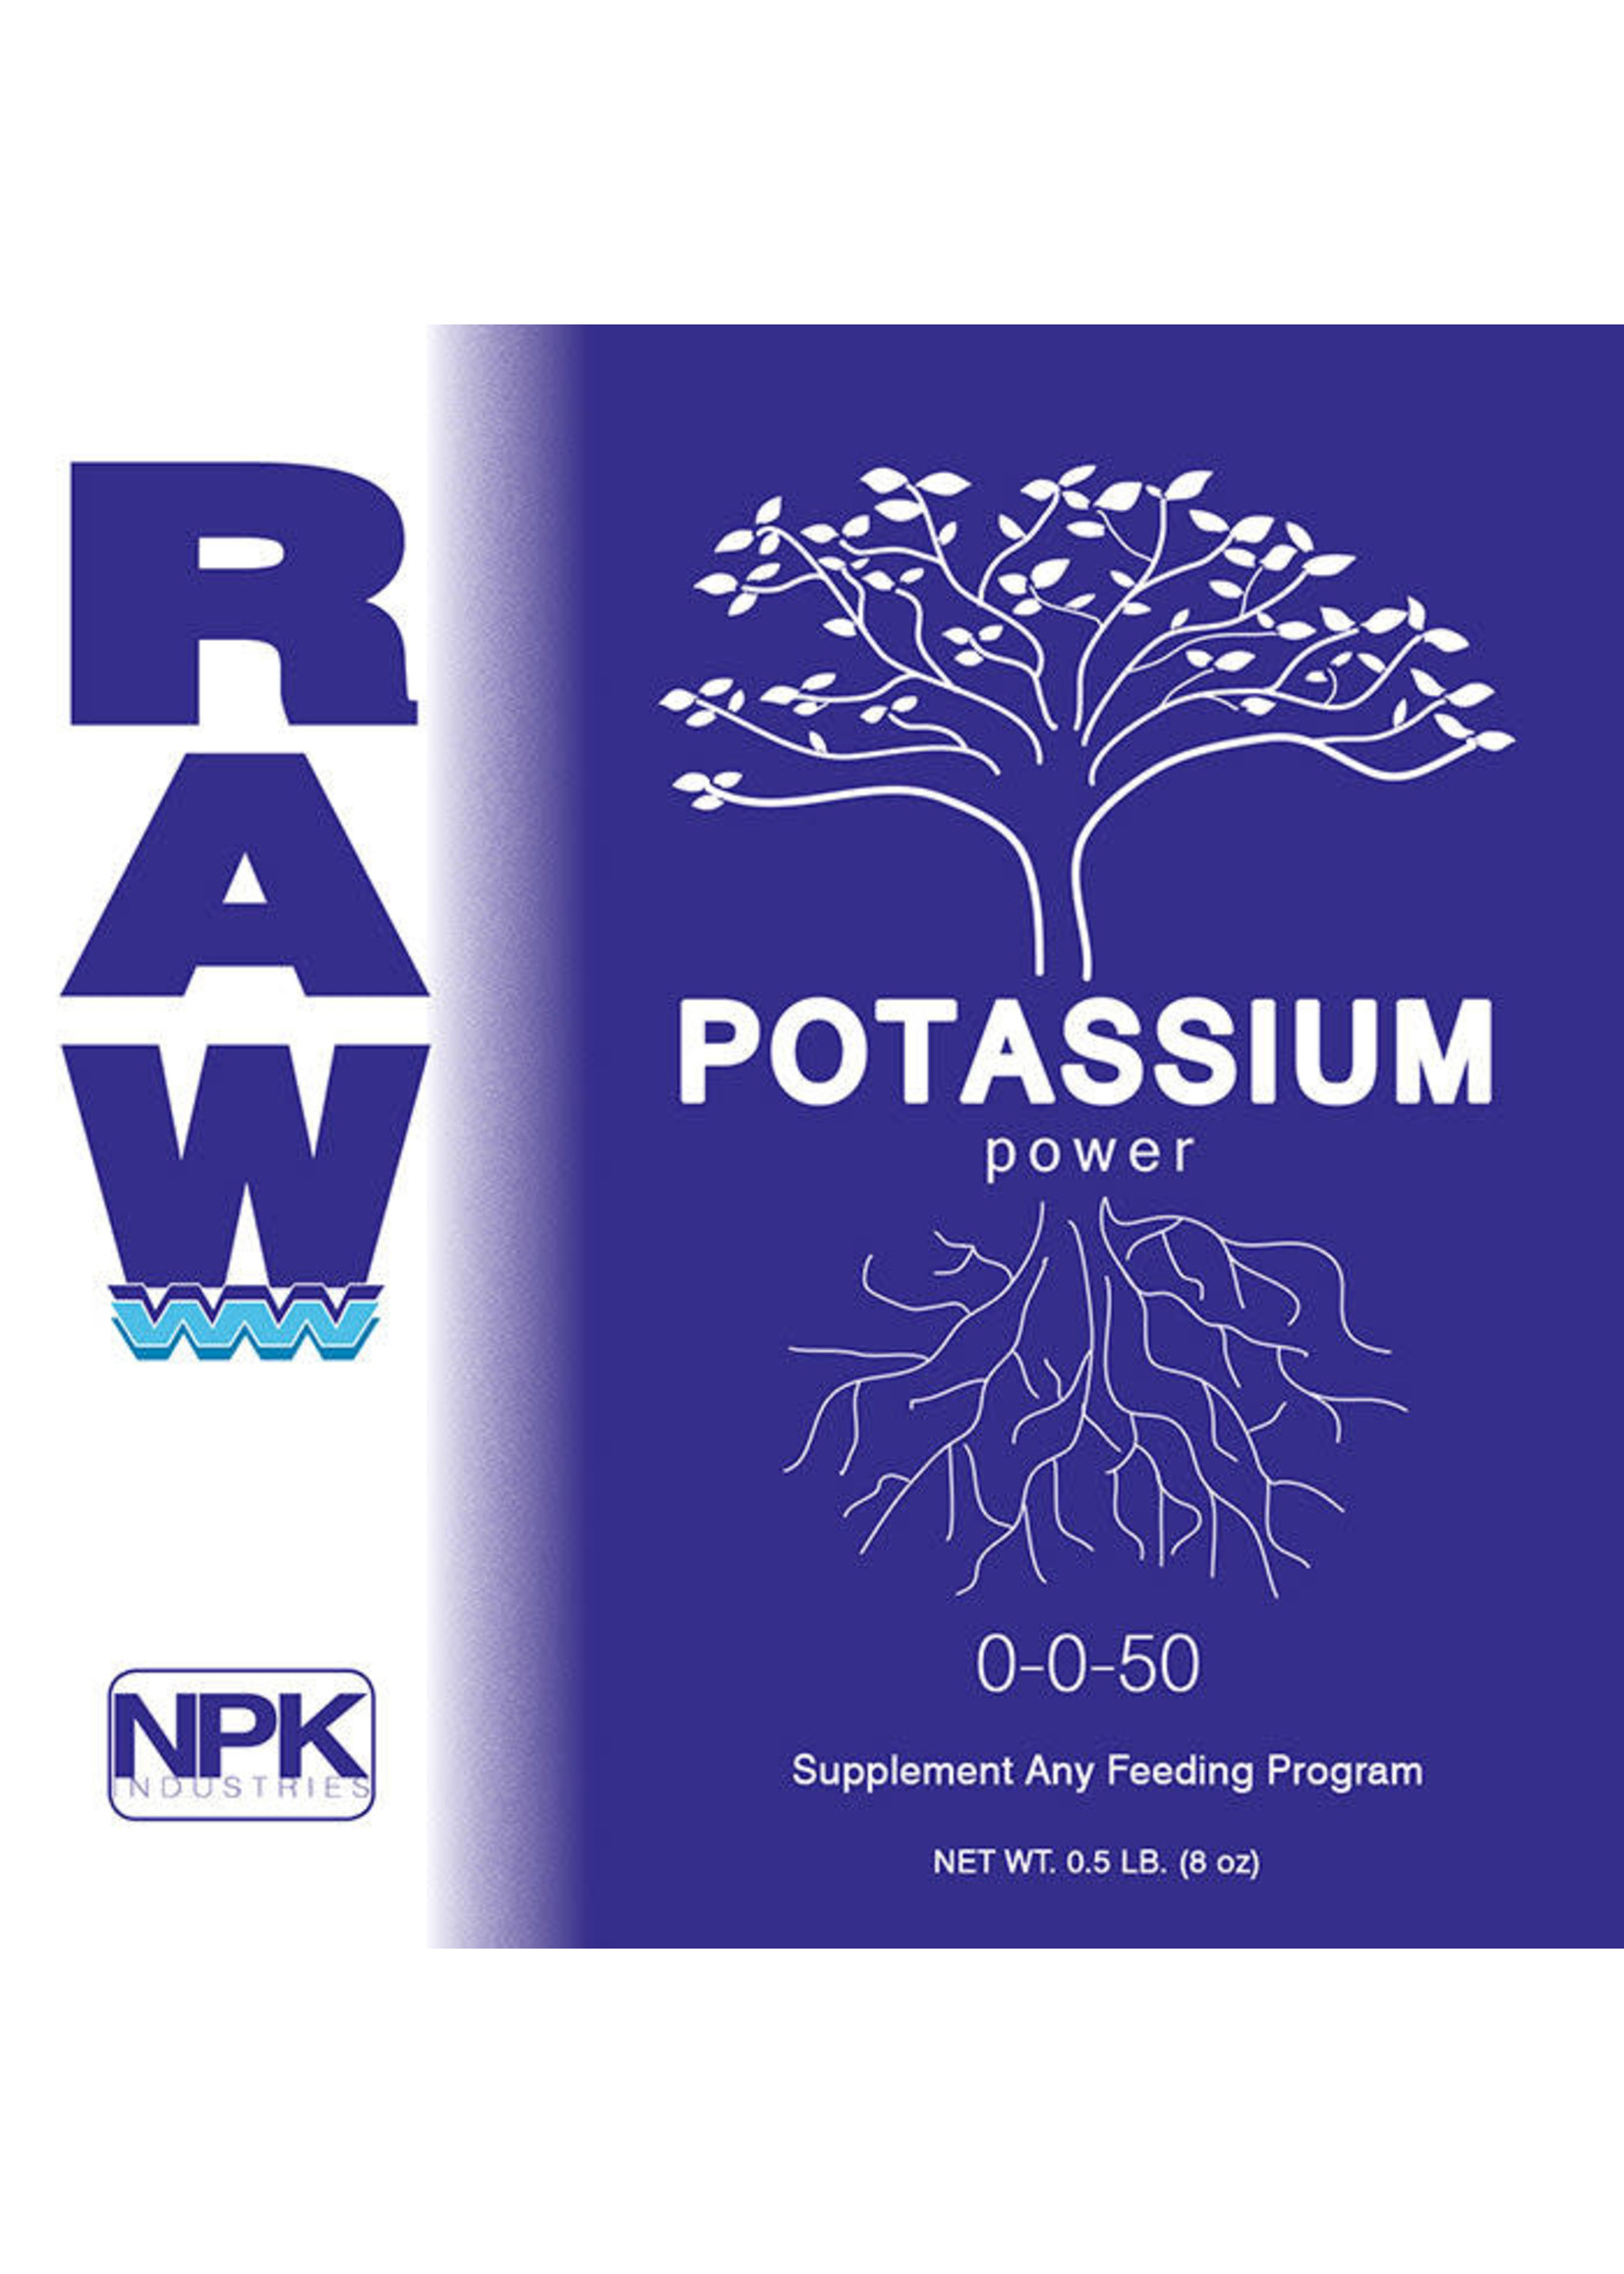 NPK Raw Potassium